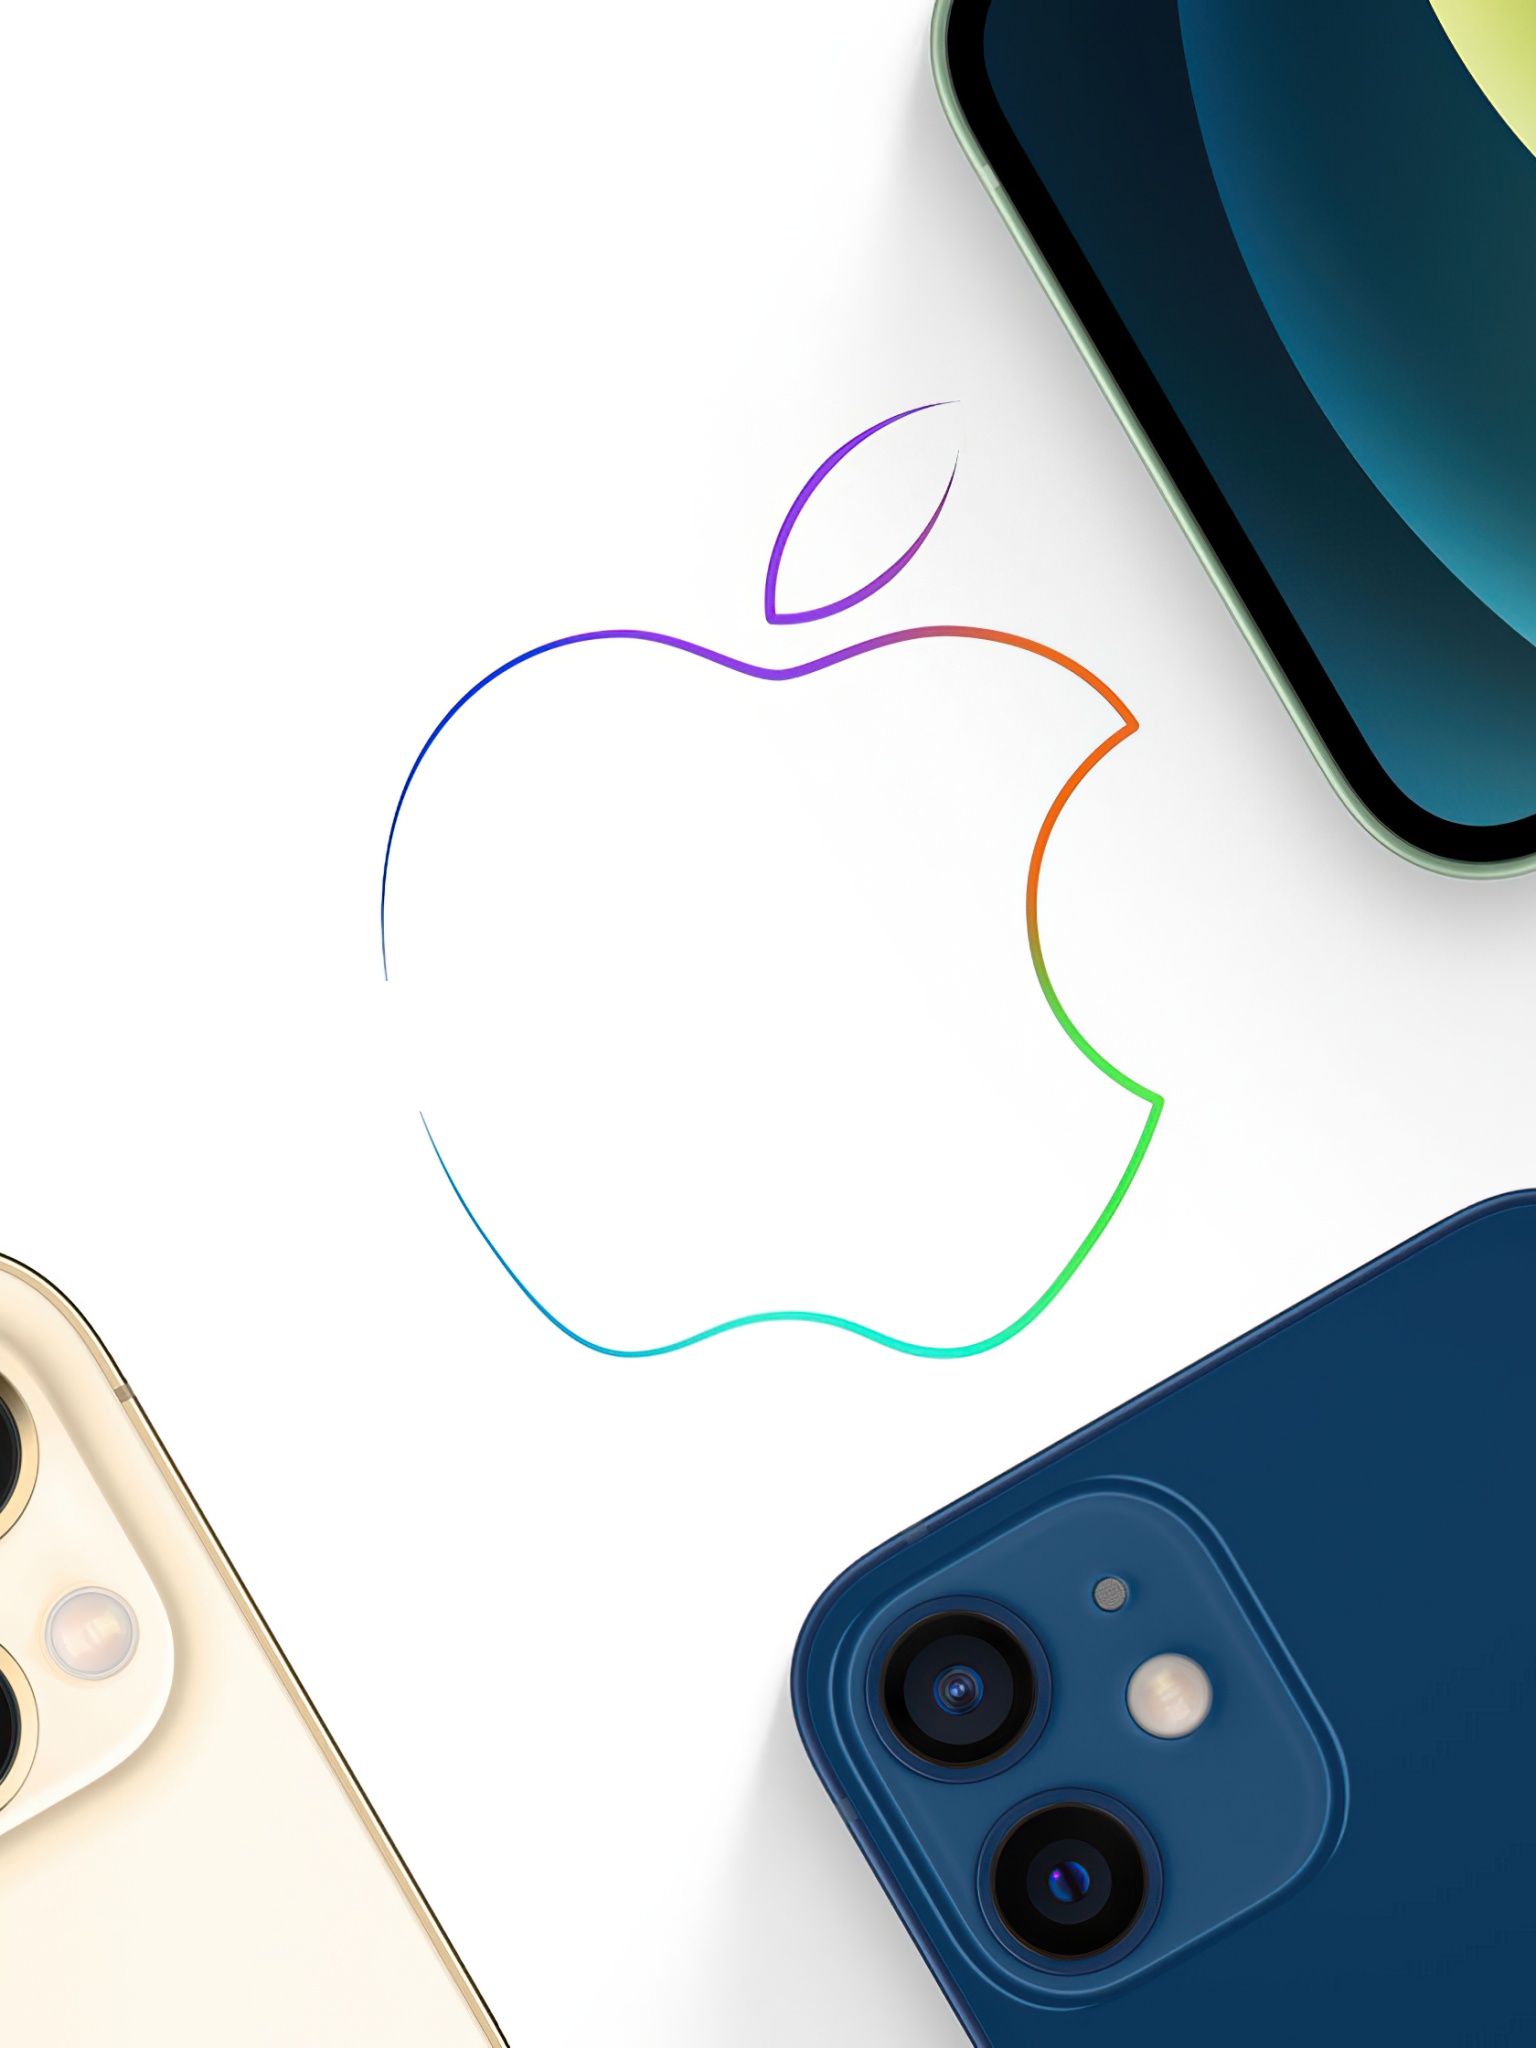 Apple logo Wallpaper 4K, iPhone iPhone 12 Pro, iPhone 12 Pro Max, Technology